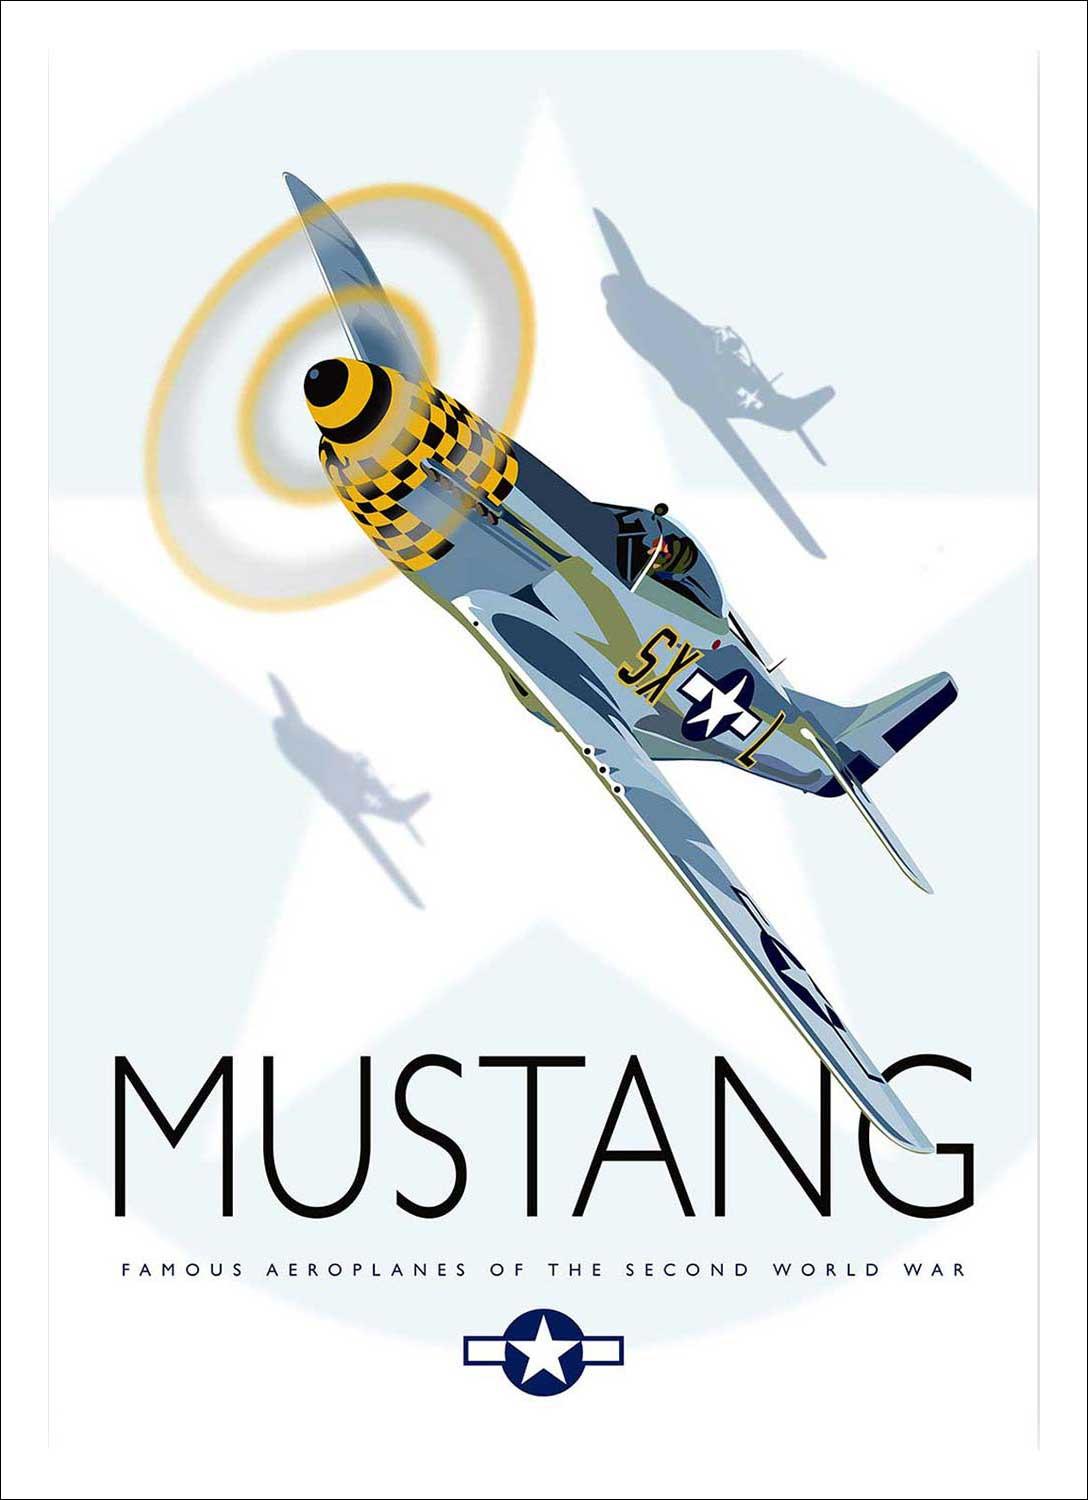 Mustang Art Print from an original illustration by artist Peter McDermott